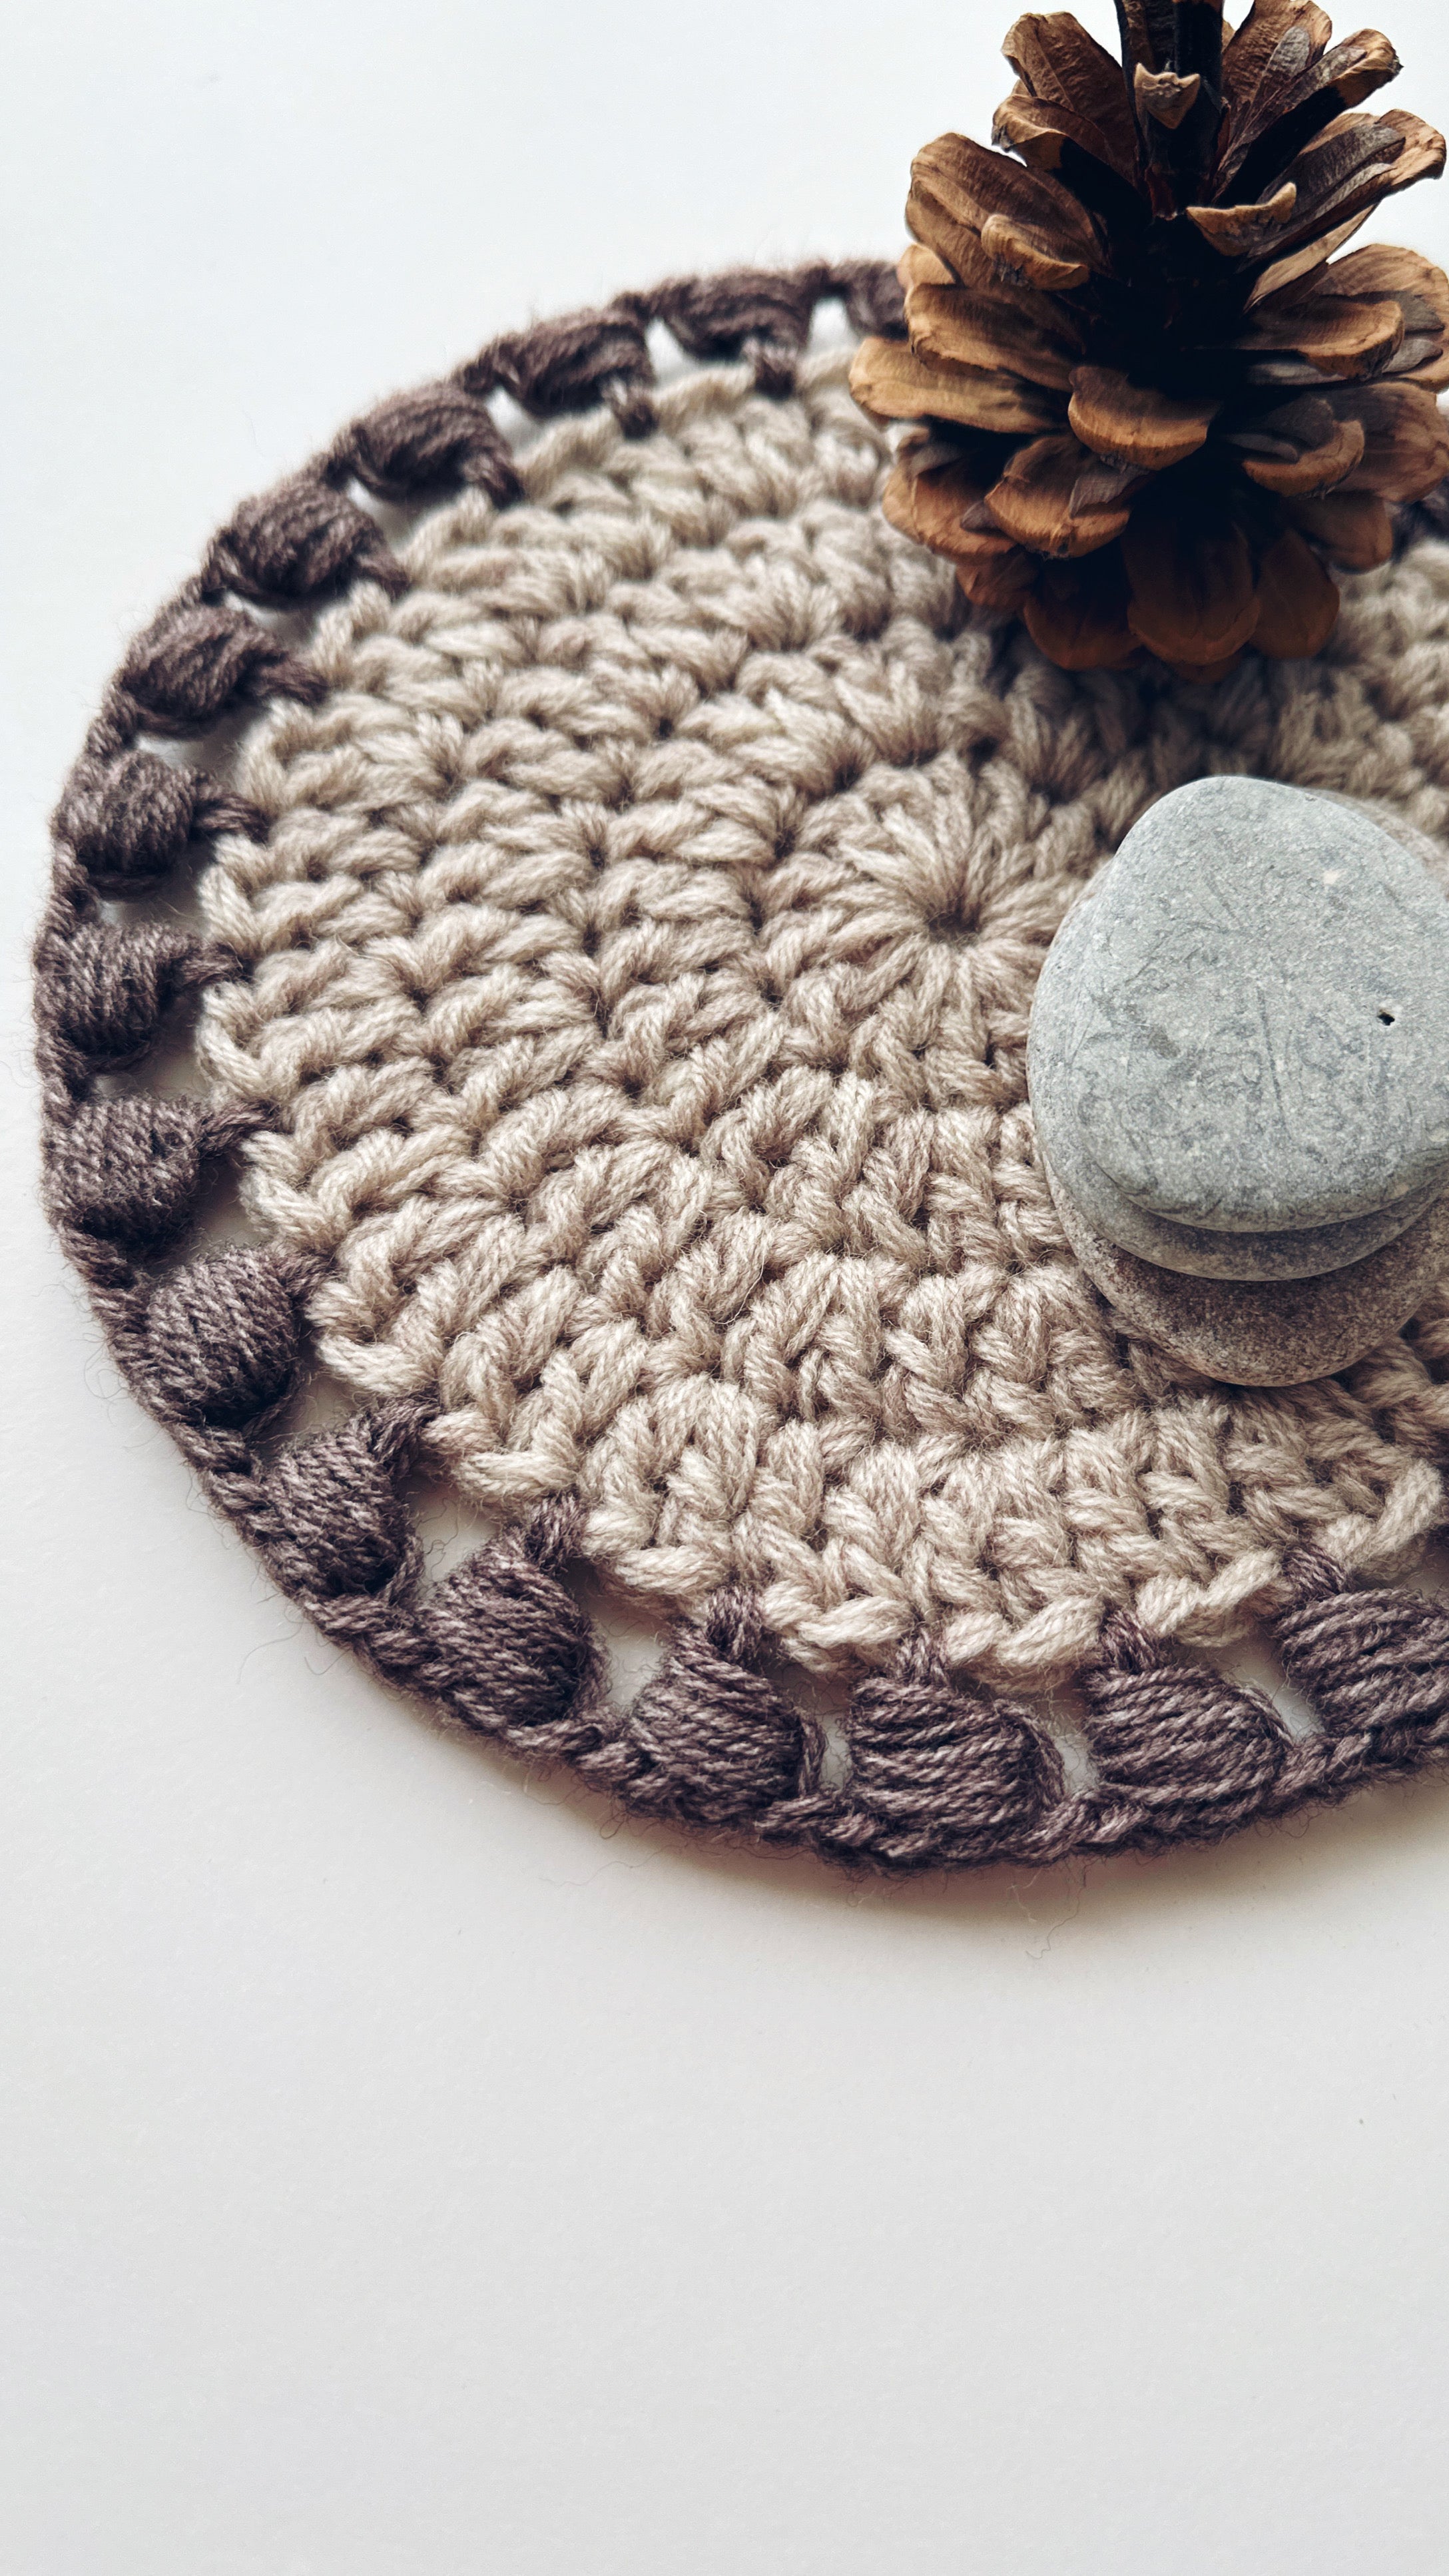 Magnolia Crochet Coasters and Holder Set – The Crochet Village